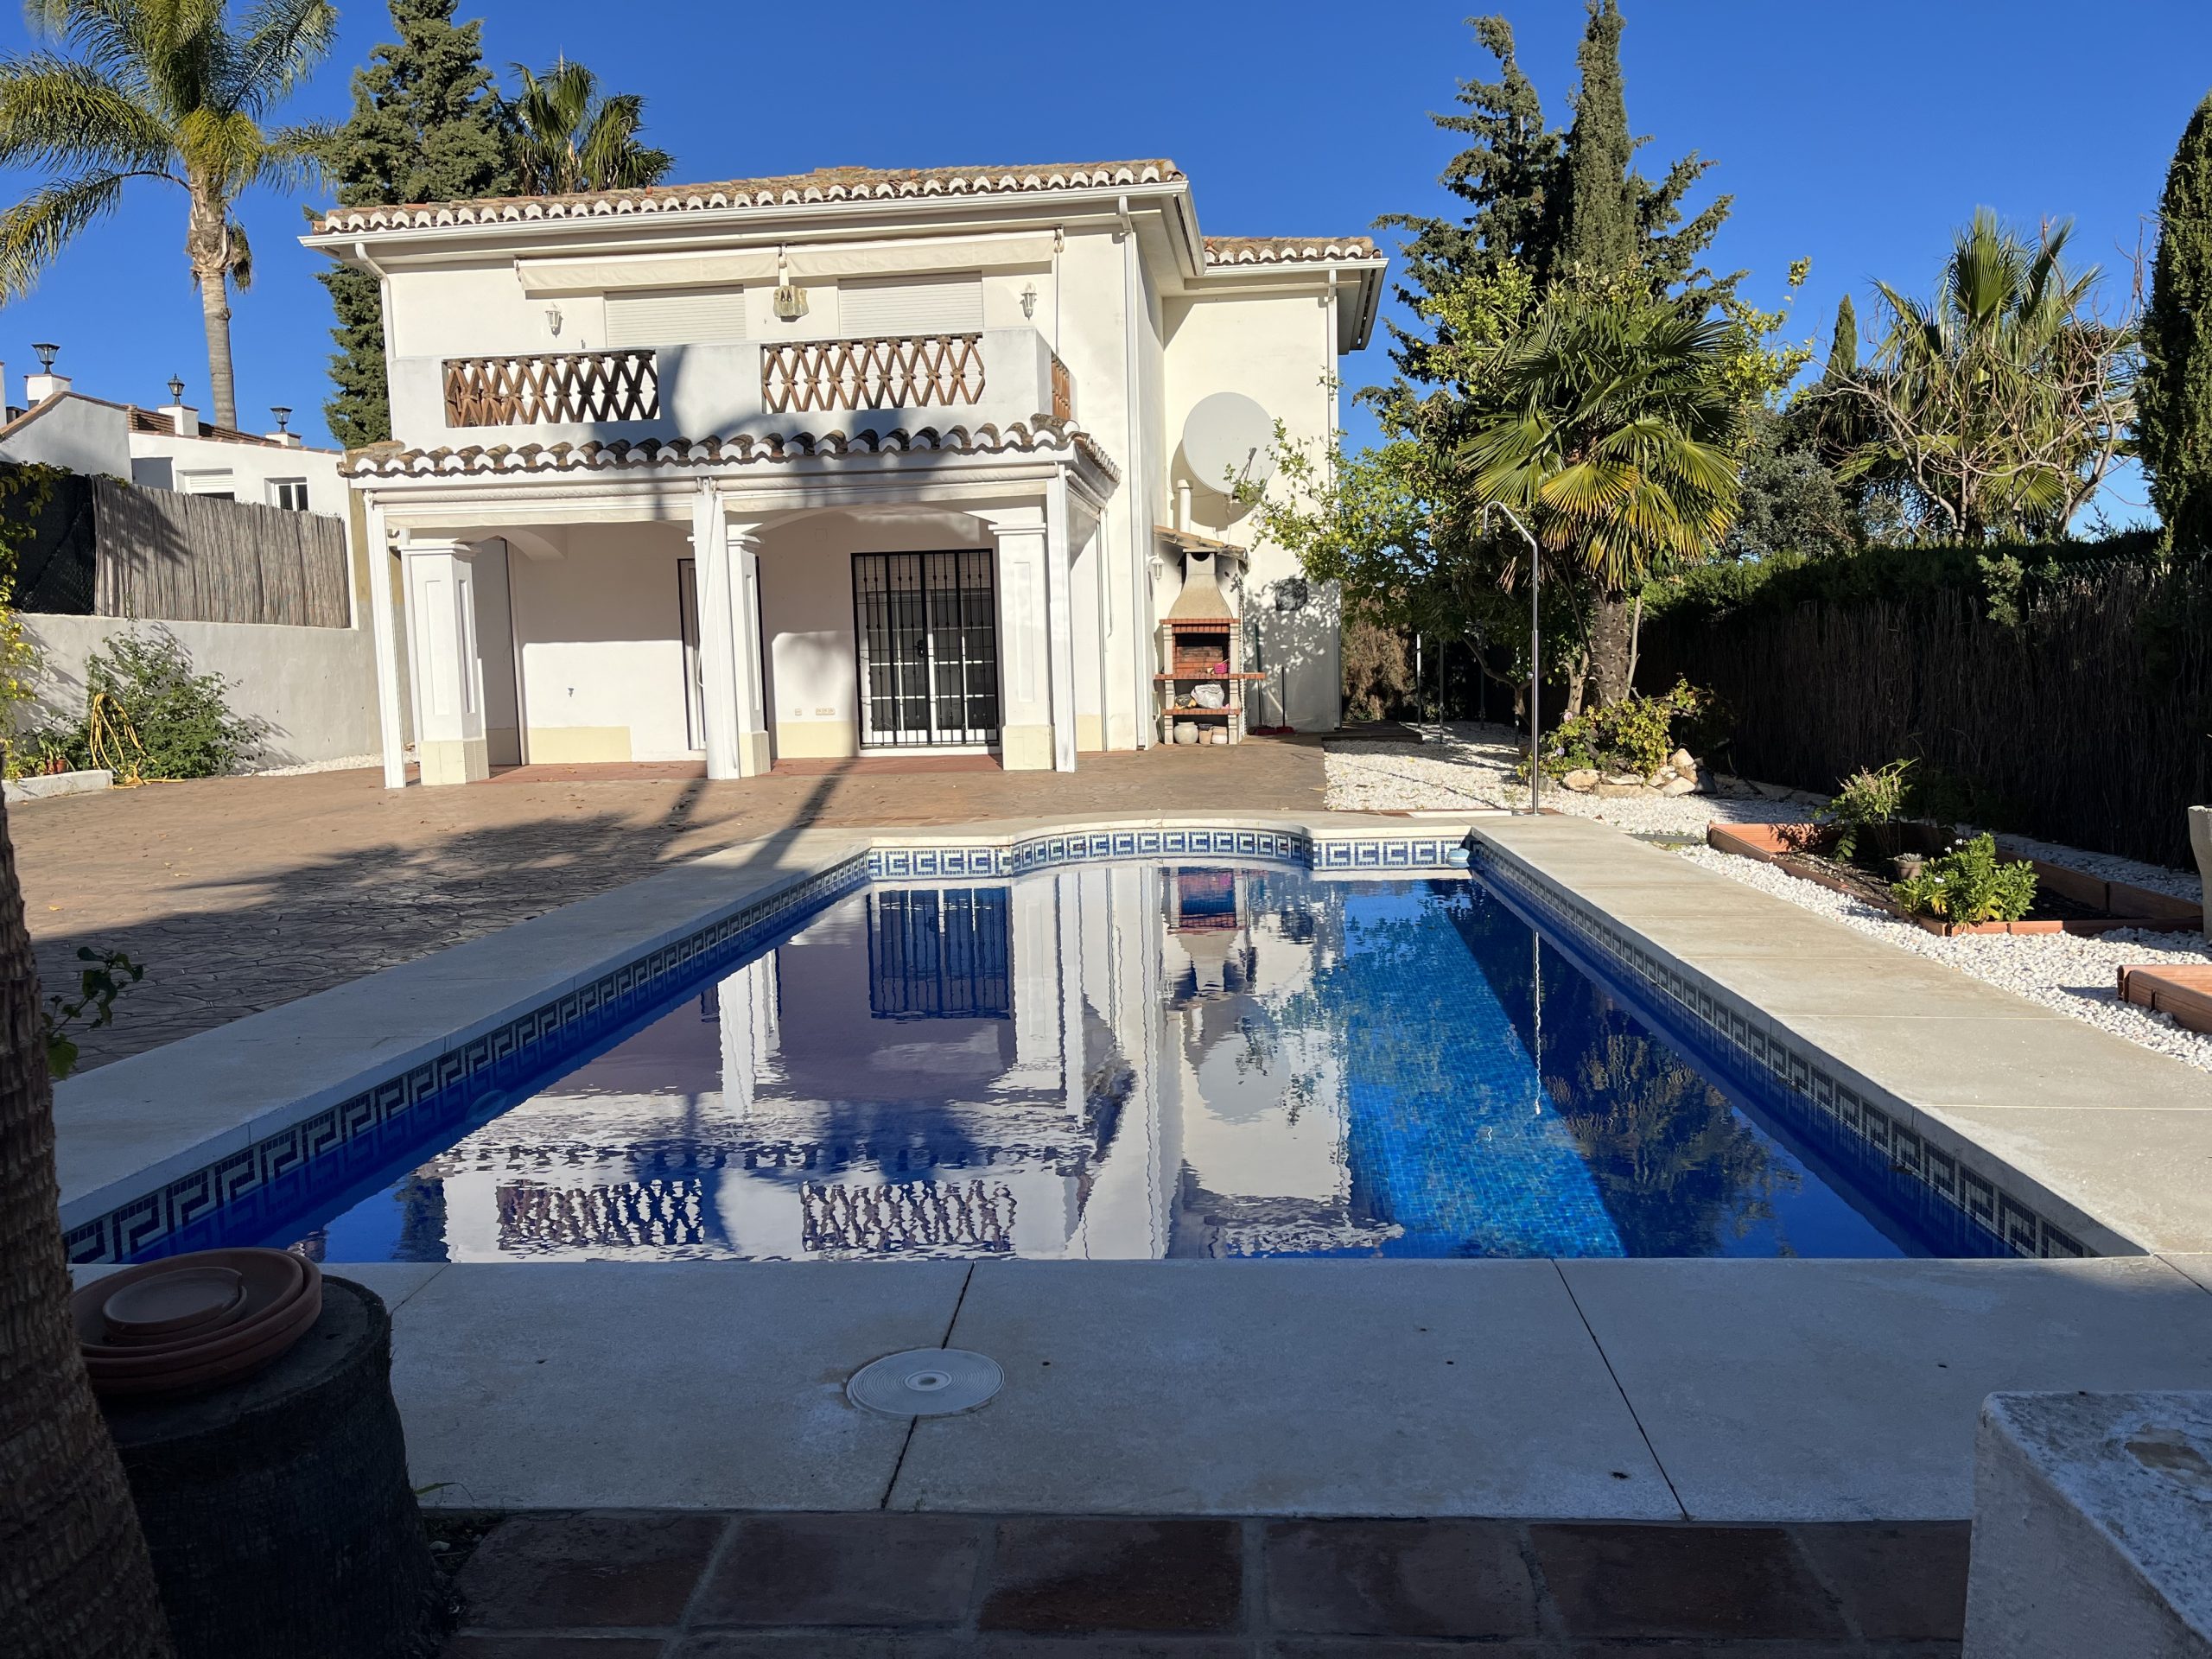 Ri 841 Five bedroom villa with pool in urbanisation near Coin – 1,800€